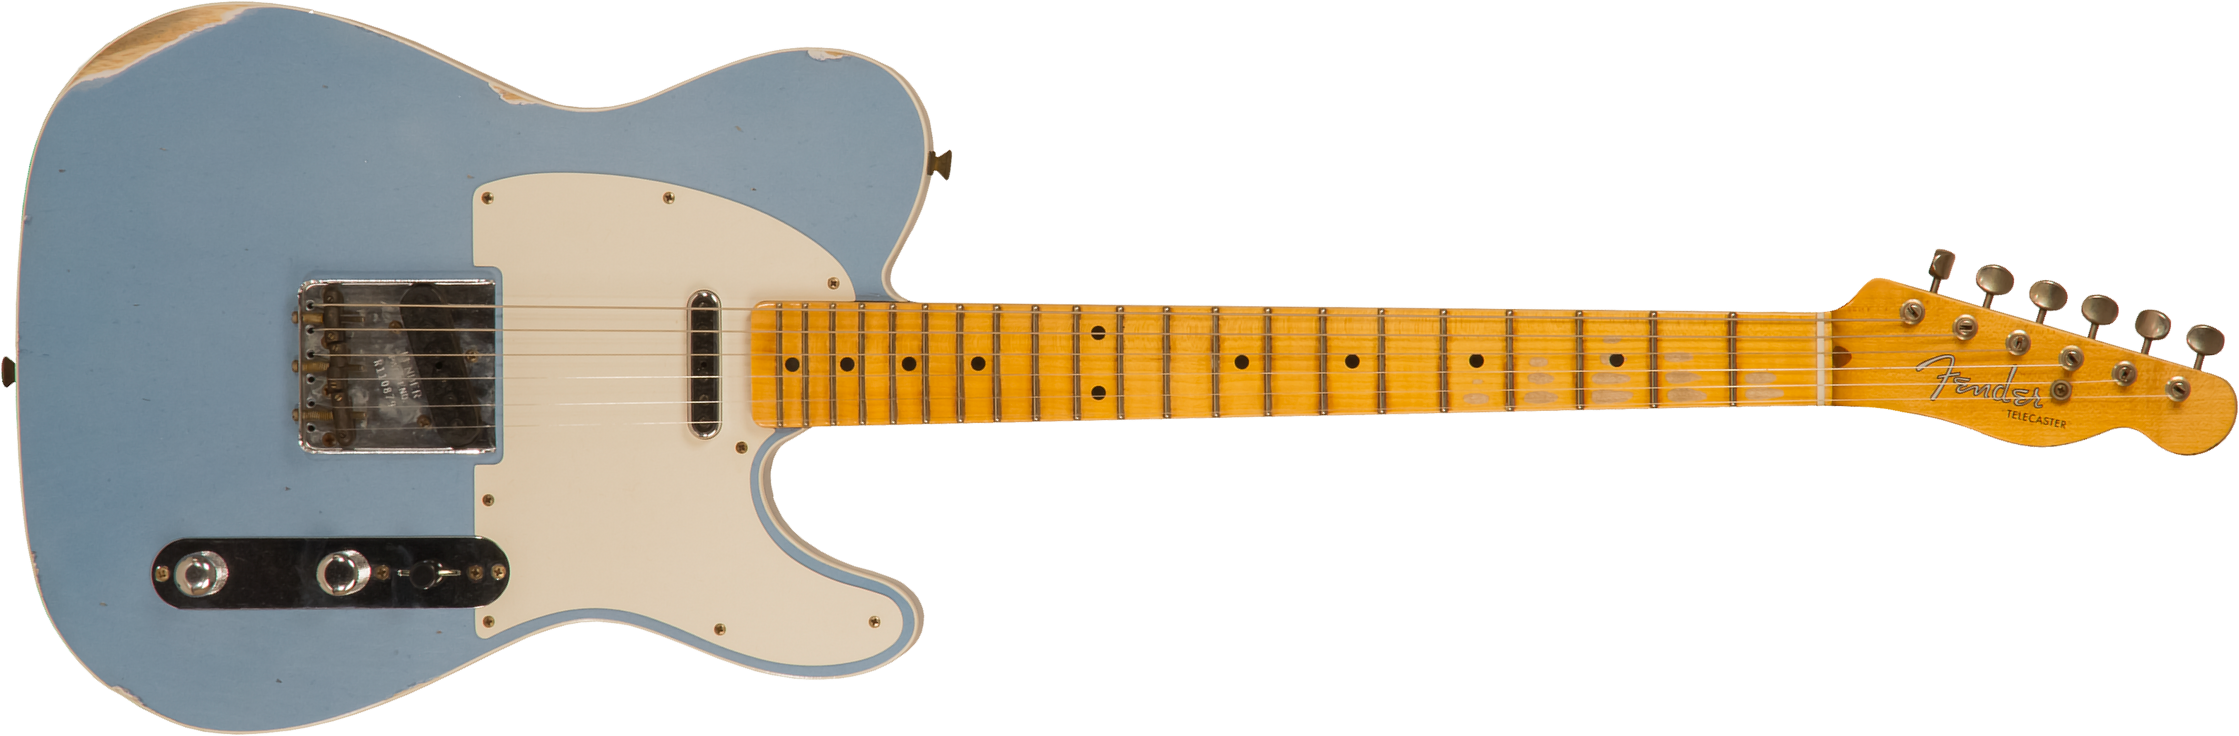 Fender Custom Shop Tele Custom Tomatillo 2s Ht Mn #r110879 - Relic Lake Placid Blue - Guitarra eléctrica con forma de tel - Main picture